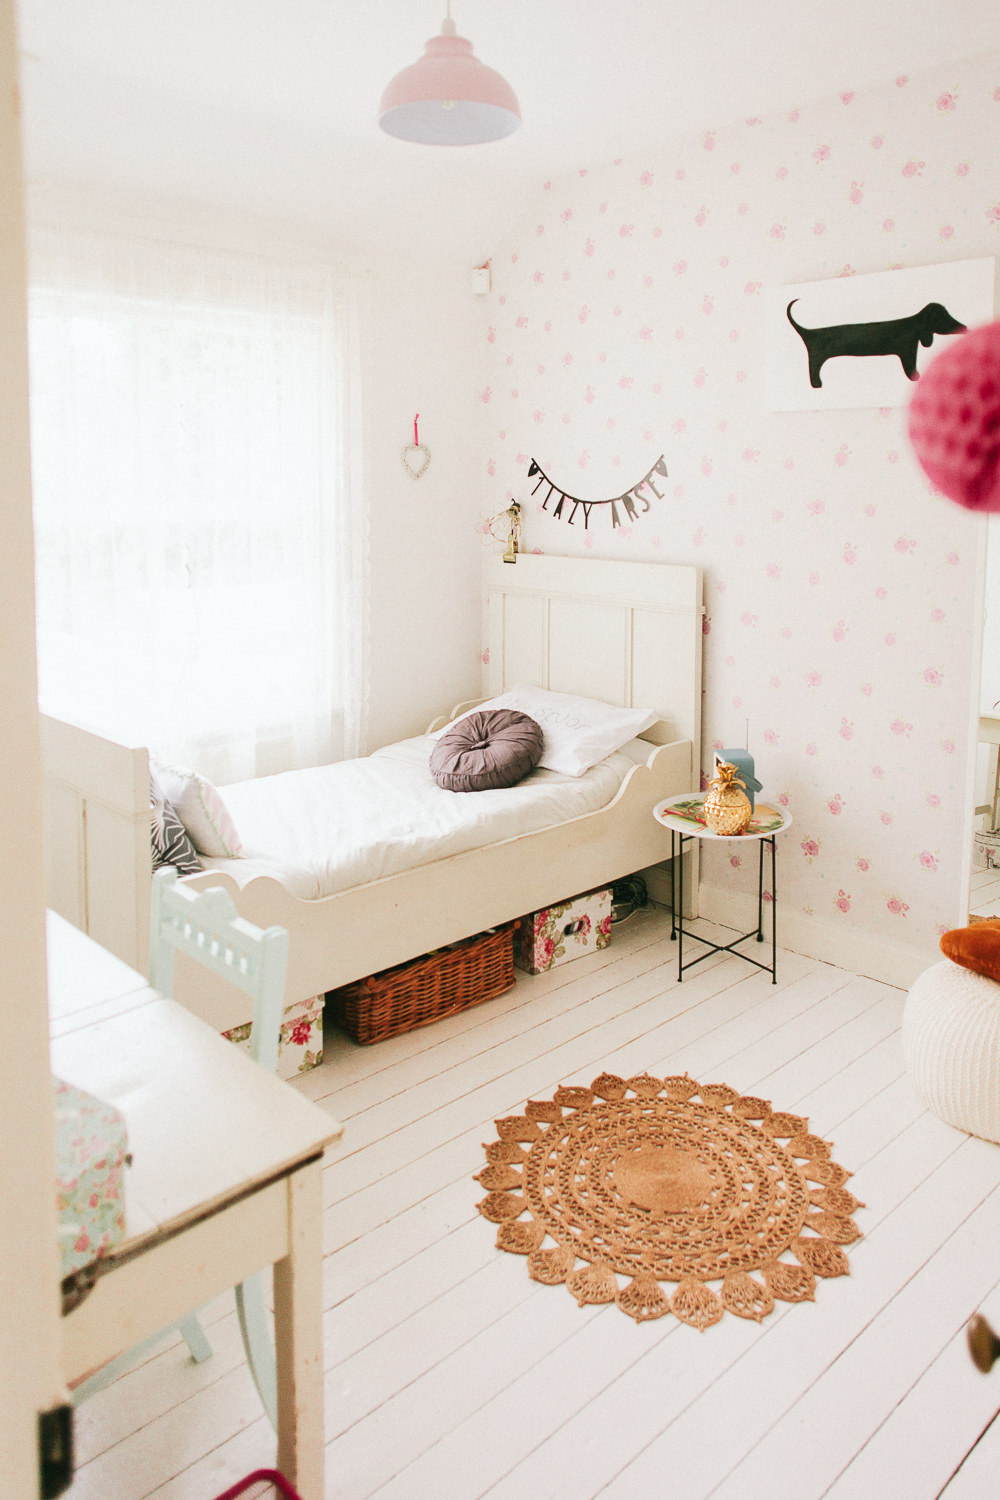 Vintage styled girl's bedroom